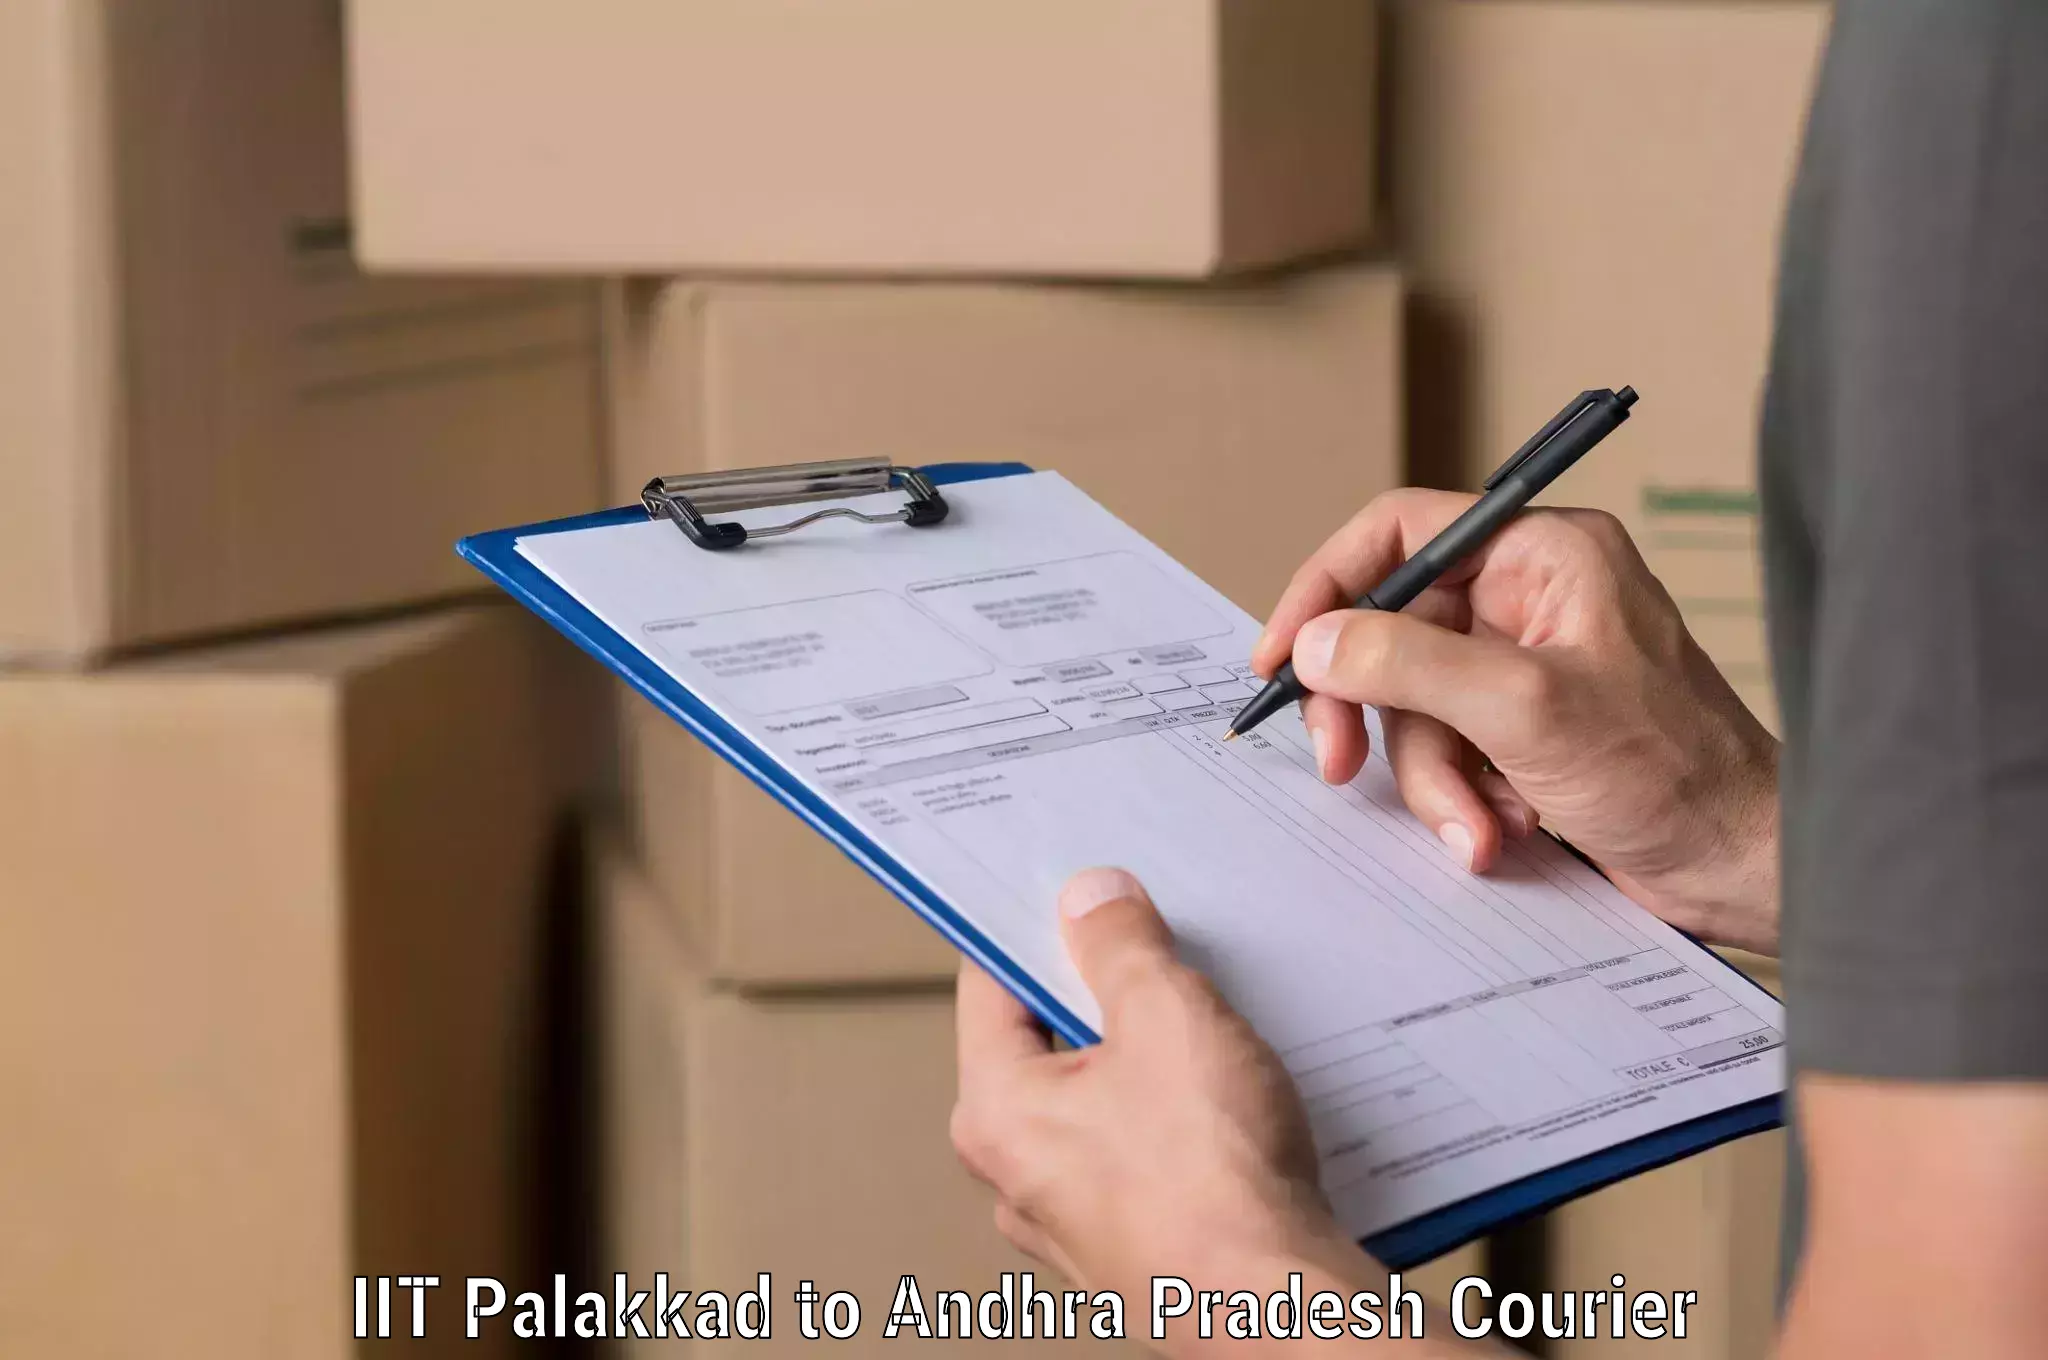 Courier service comparison IIT Palakkad to Malikipuram